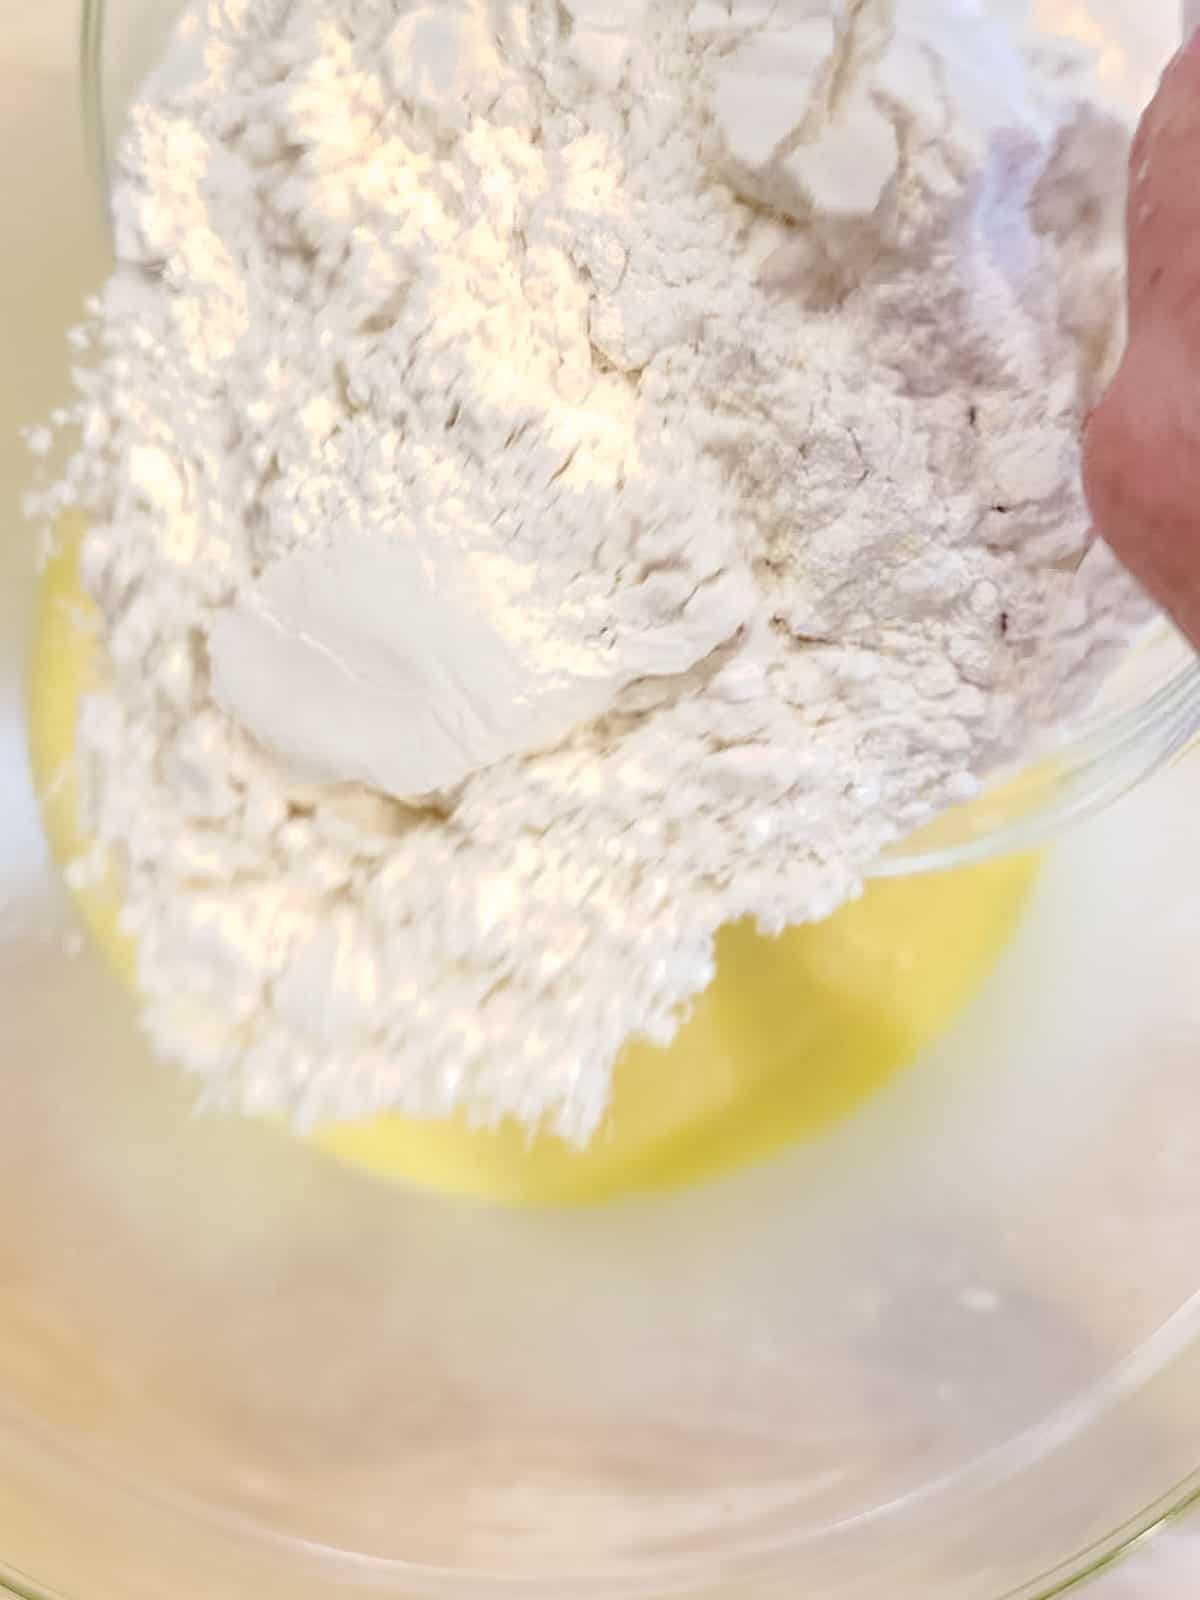 Adding flour to muffin batter wet ingredients.